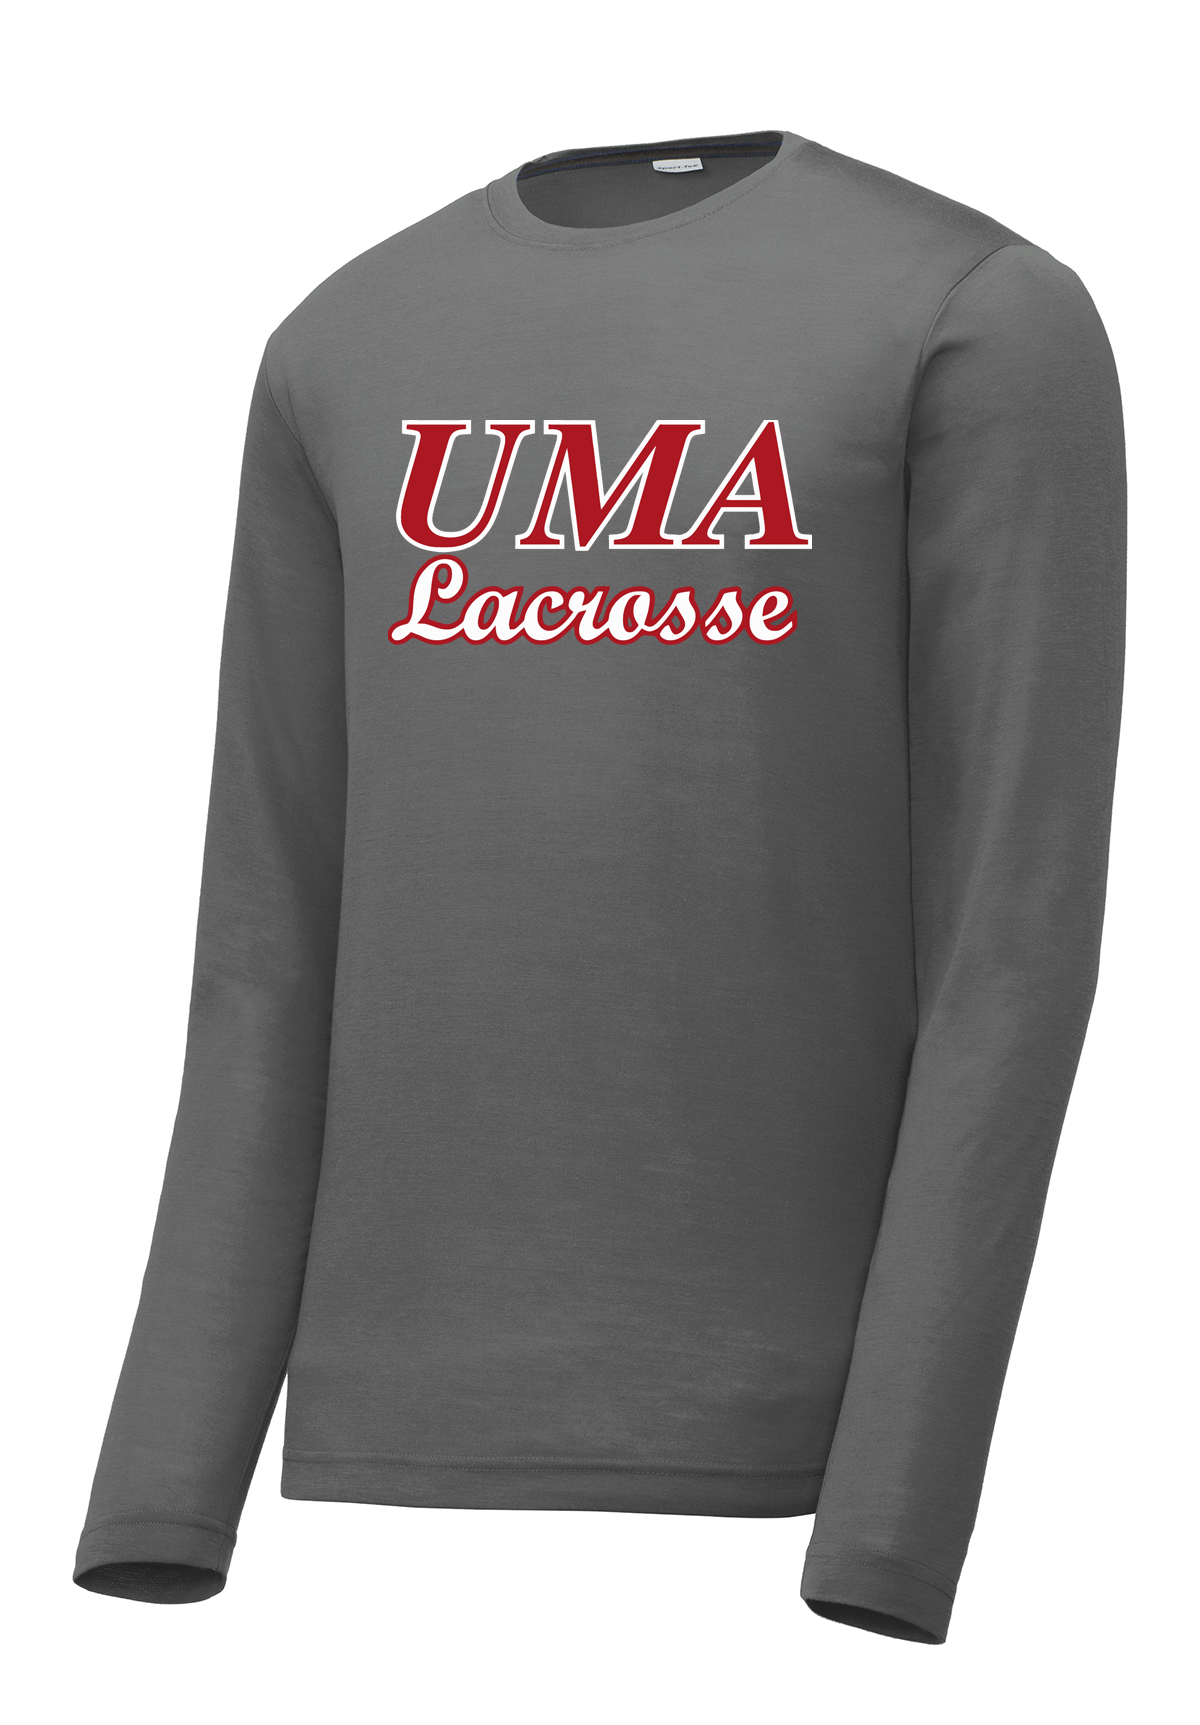 Utah Military Academy Lacrosse - Men's Long Sleeve CottonTouch Performance Shirt